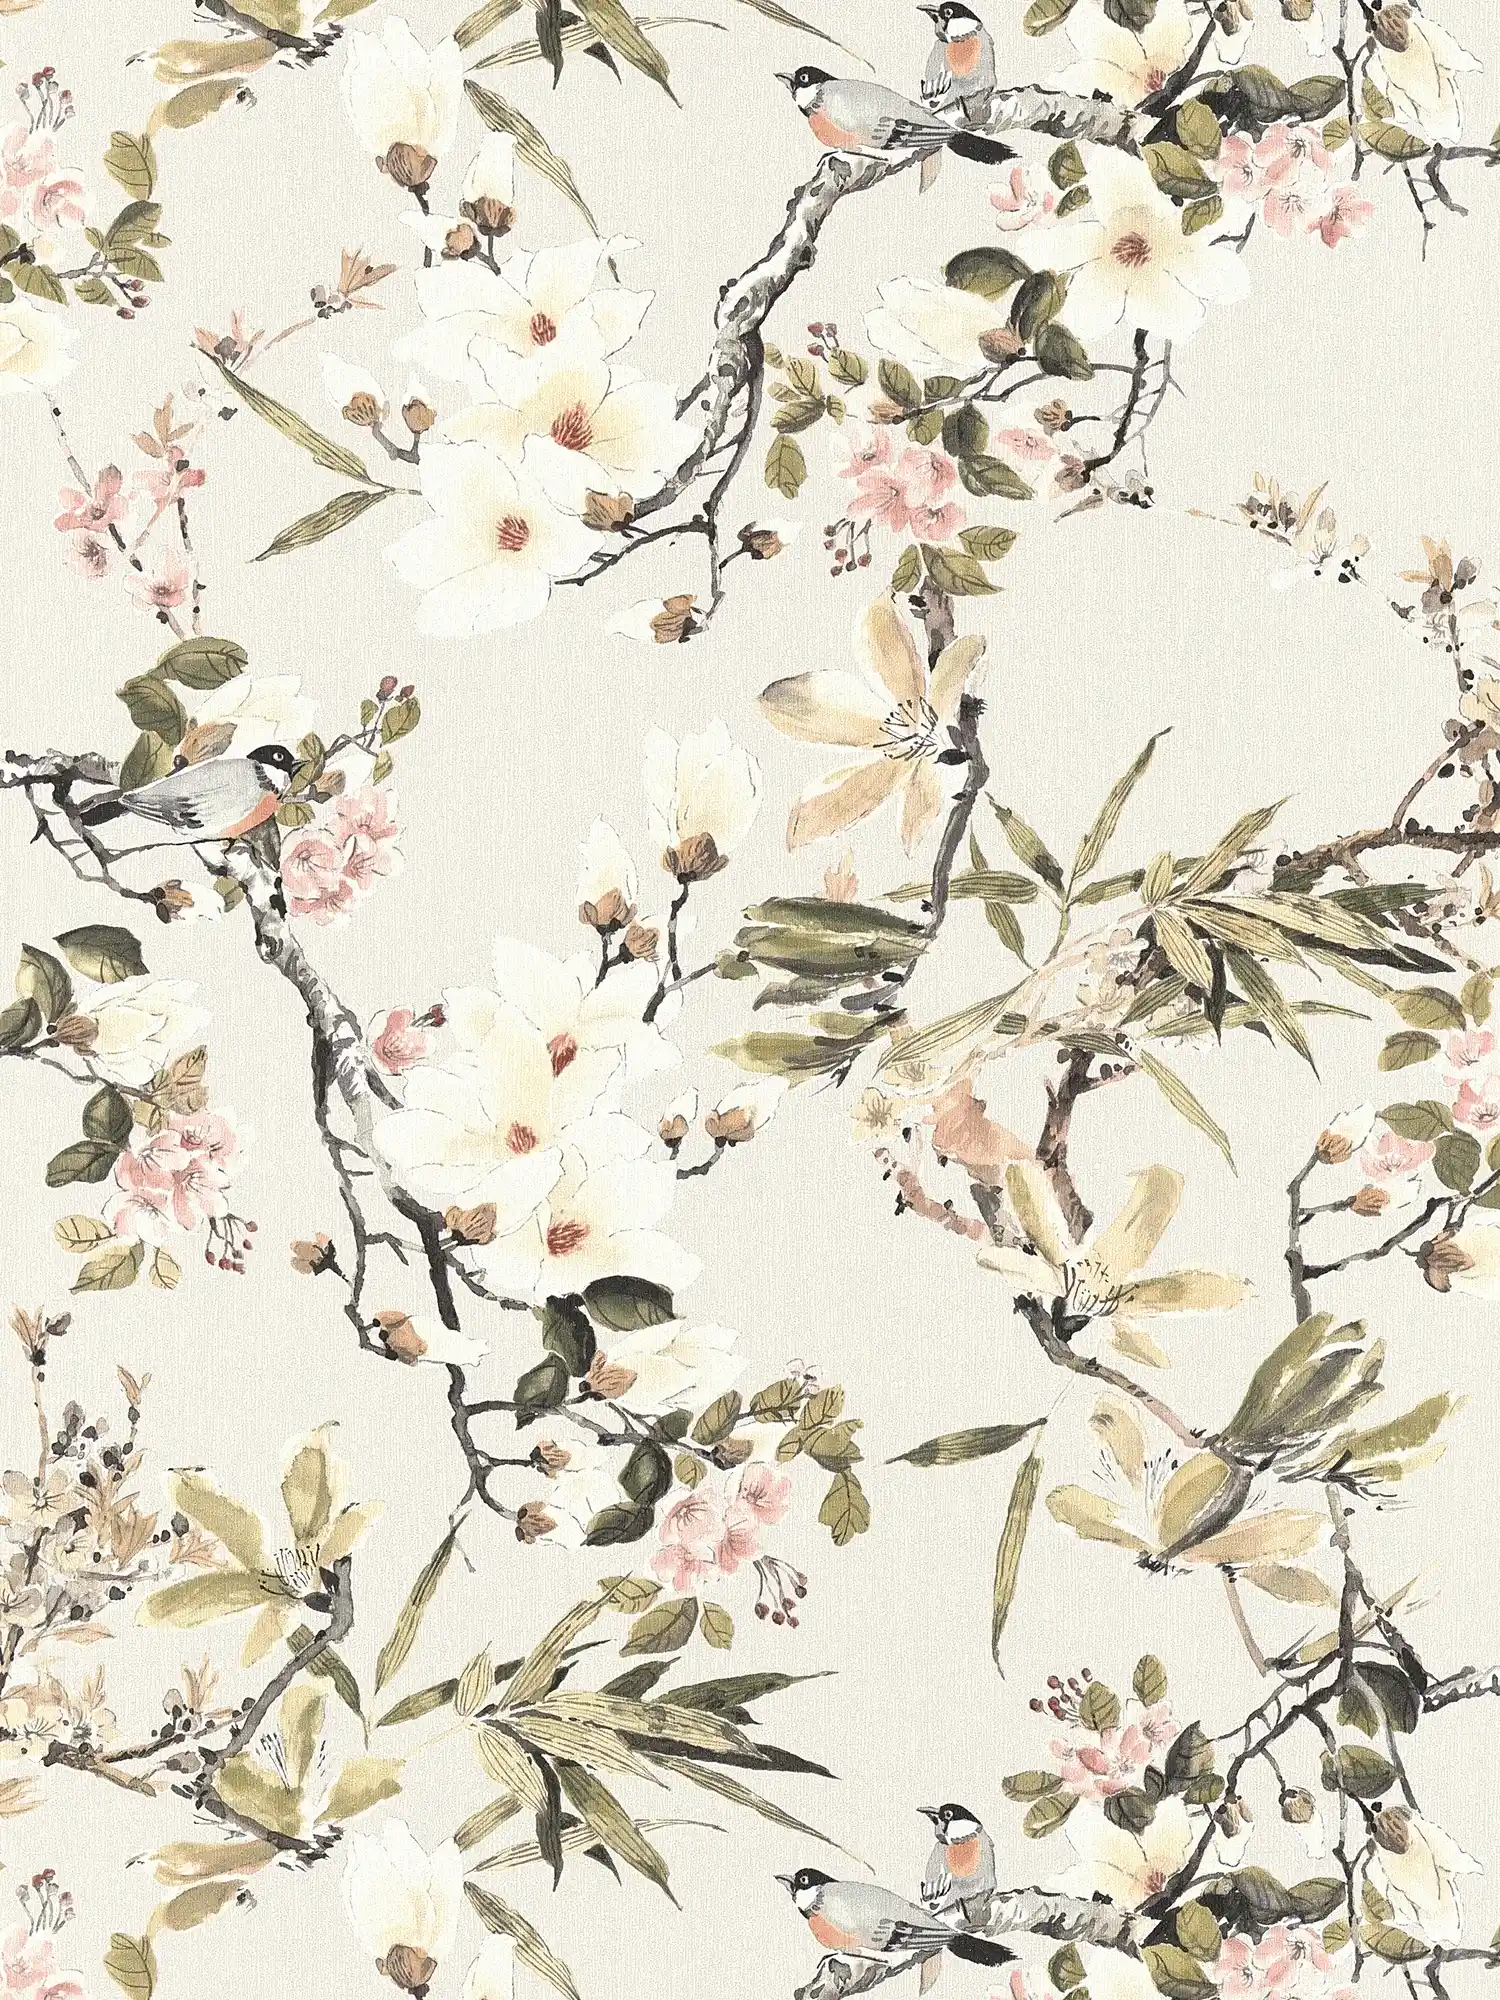         Non-woven wallpaper nature design flowers branches & birds - beige, colourful
    